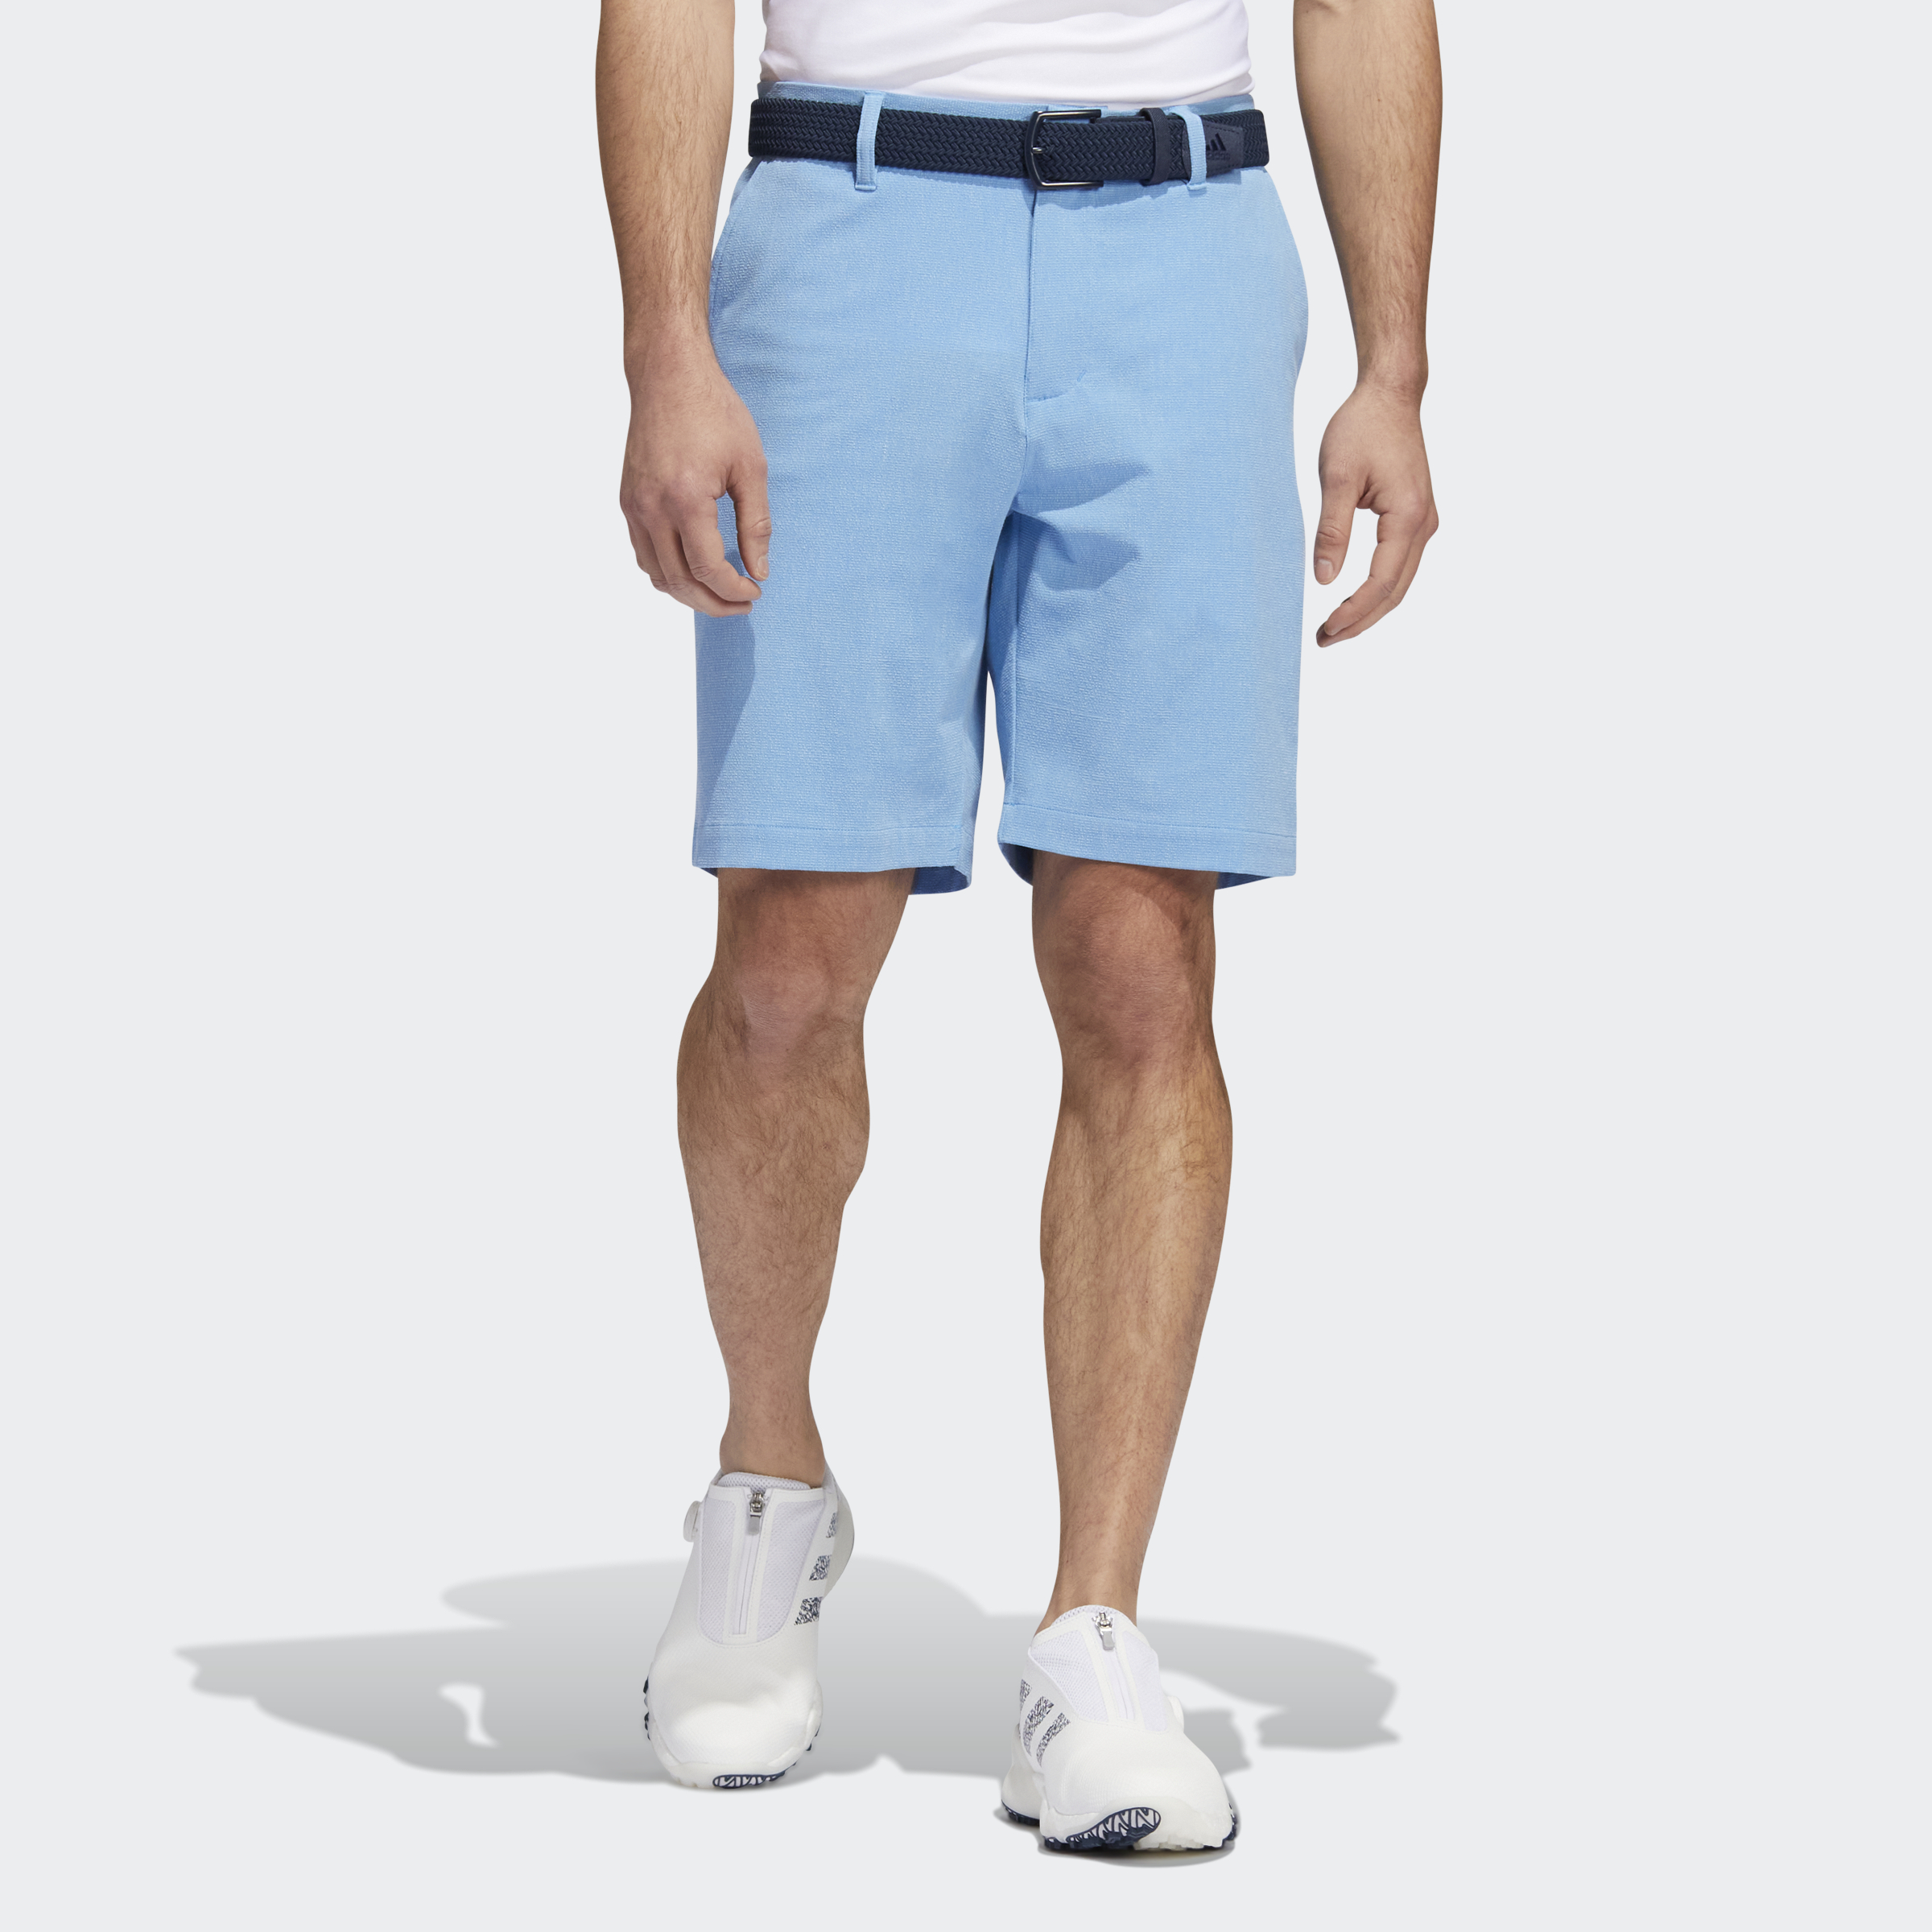 adidas Crosshatch Shorts Men's | eBay